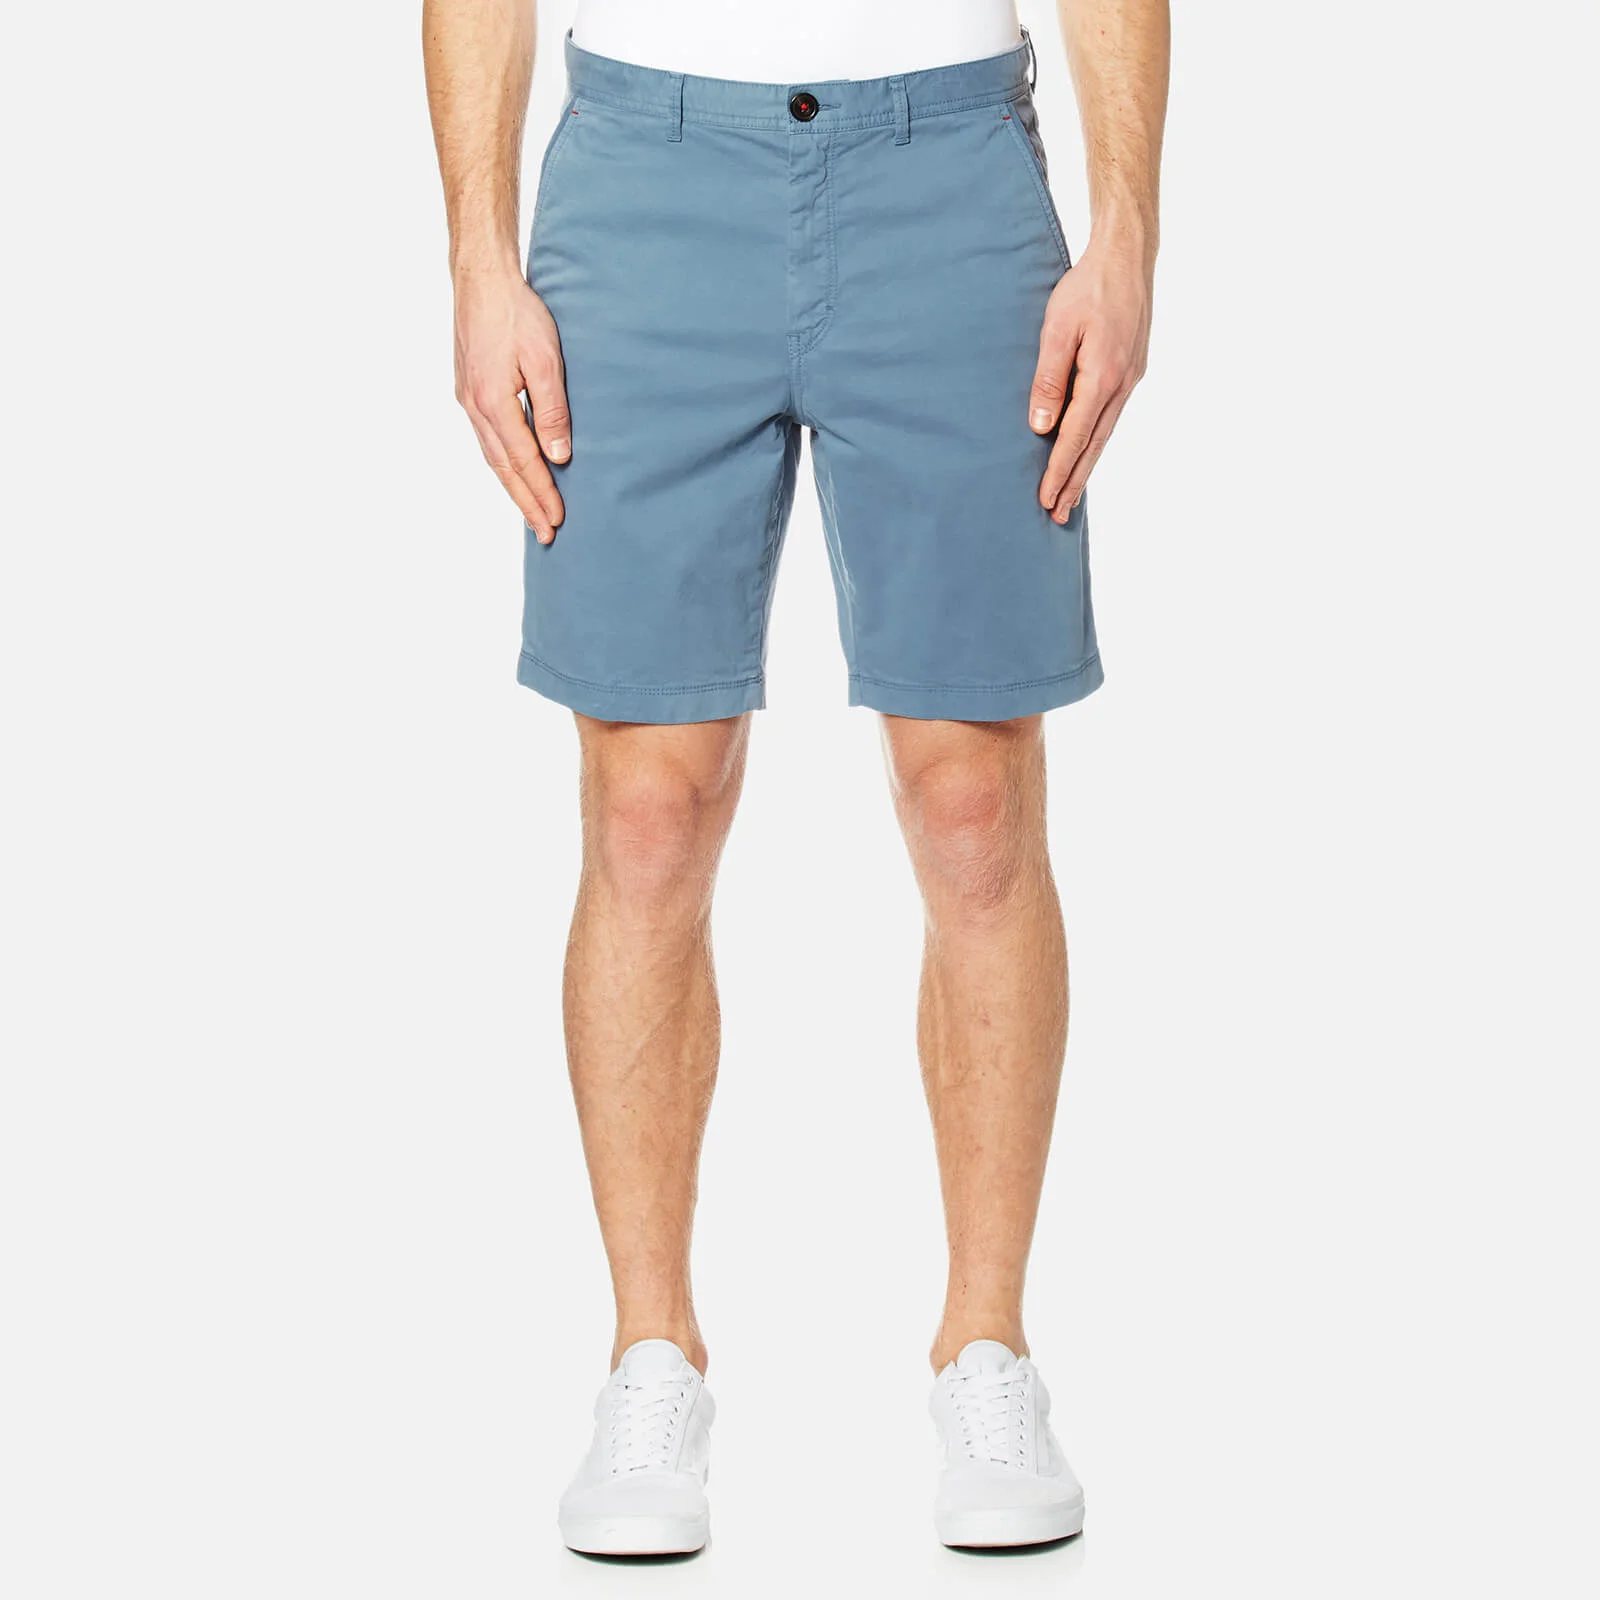 Michael Kors Men's Slim Garment Dye Shorts - Blue Grey Image 1